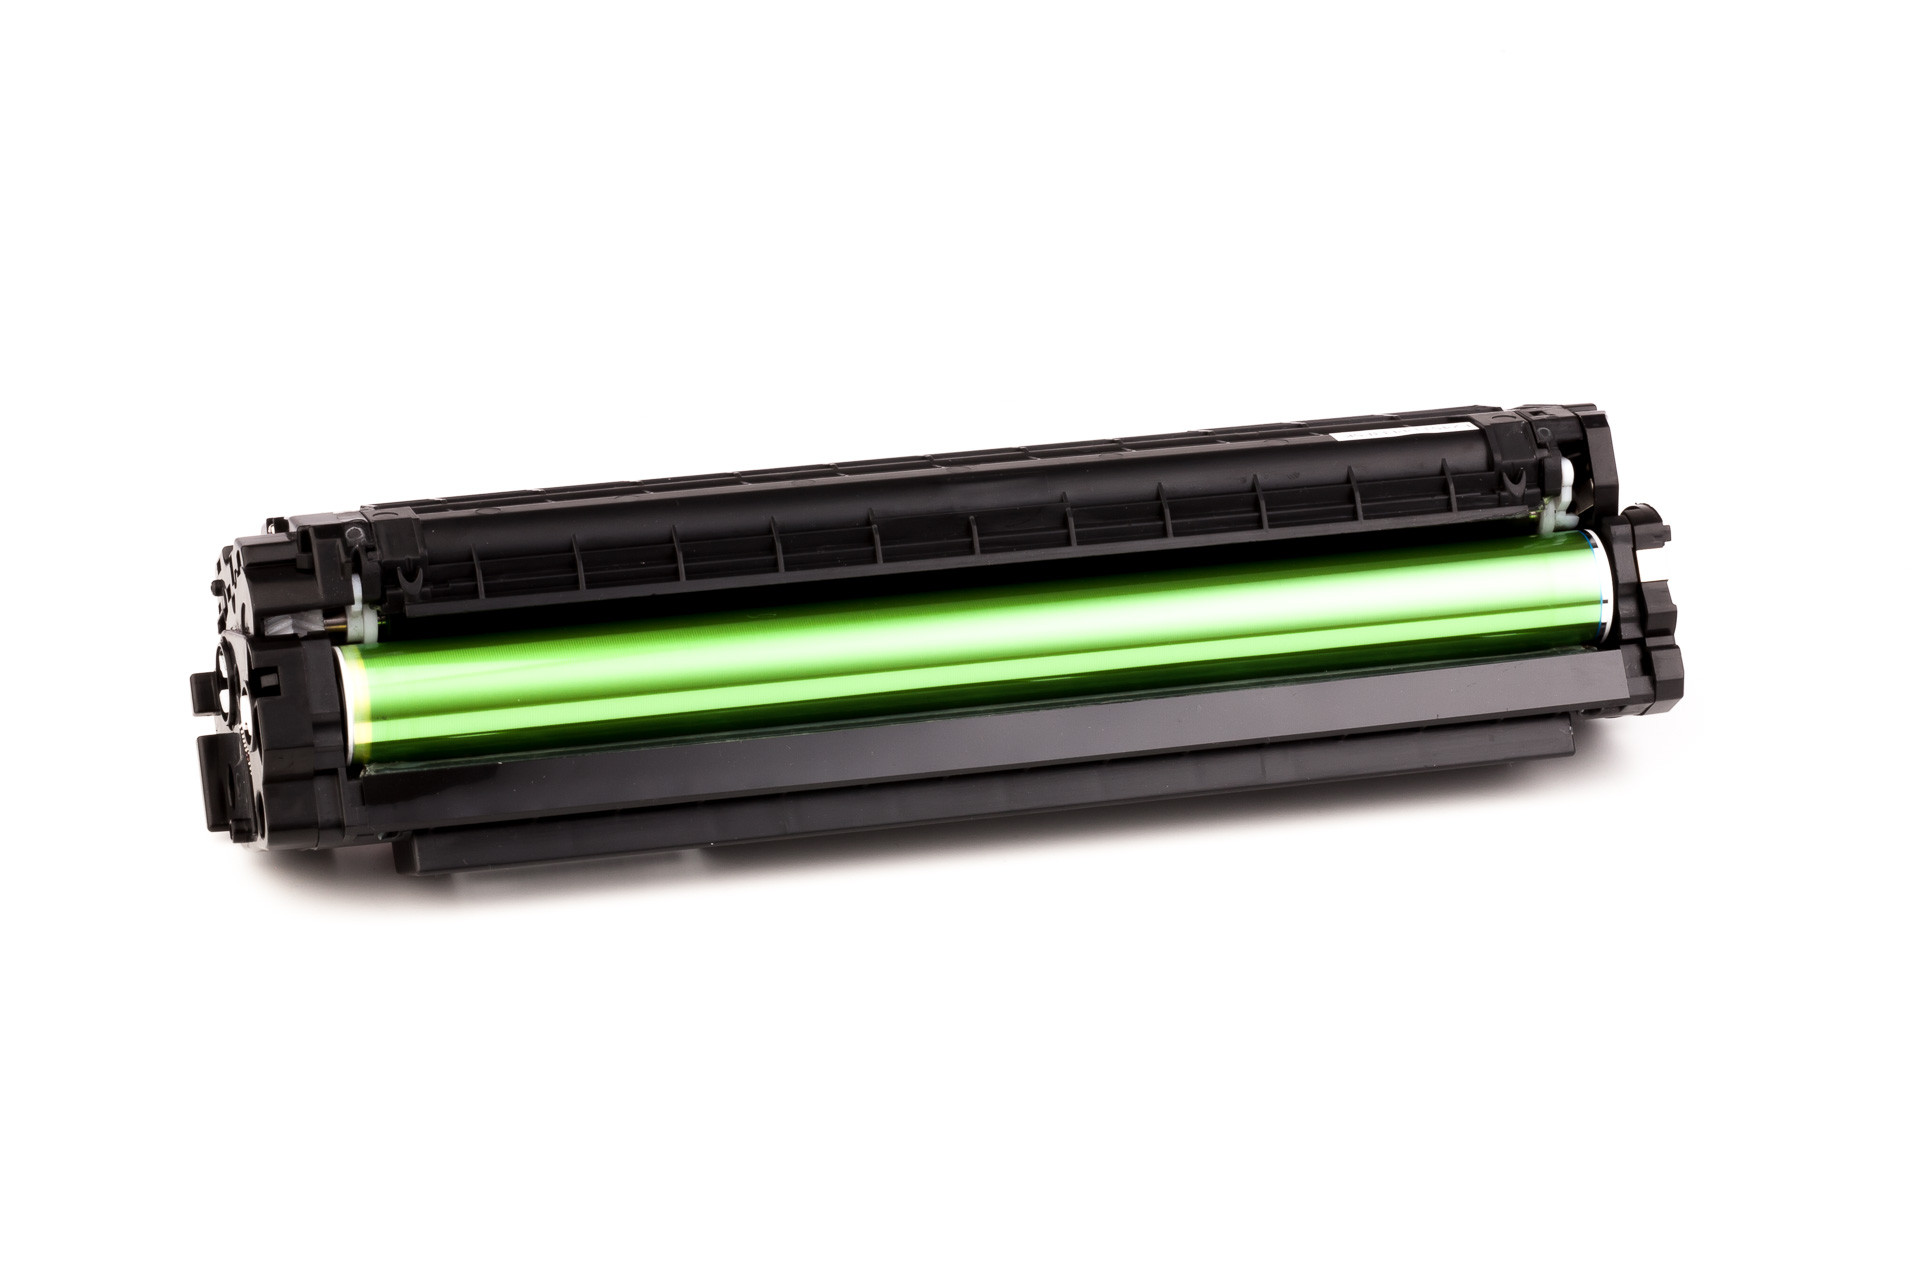 Toner cartridge (alternative) compatible with Samsung - CLTK504SELS/CLT-K 504 S/ELS - K504 - CLP 415 N black